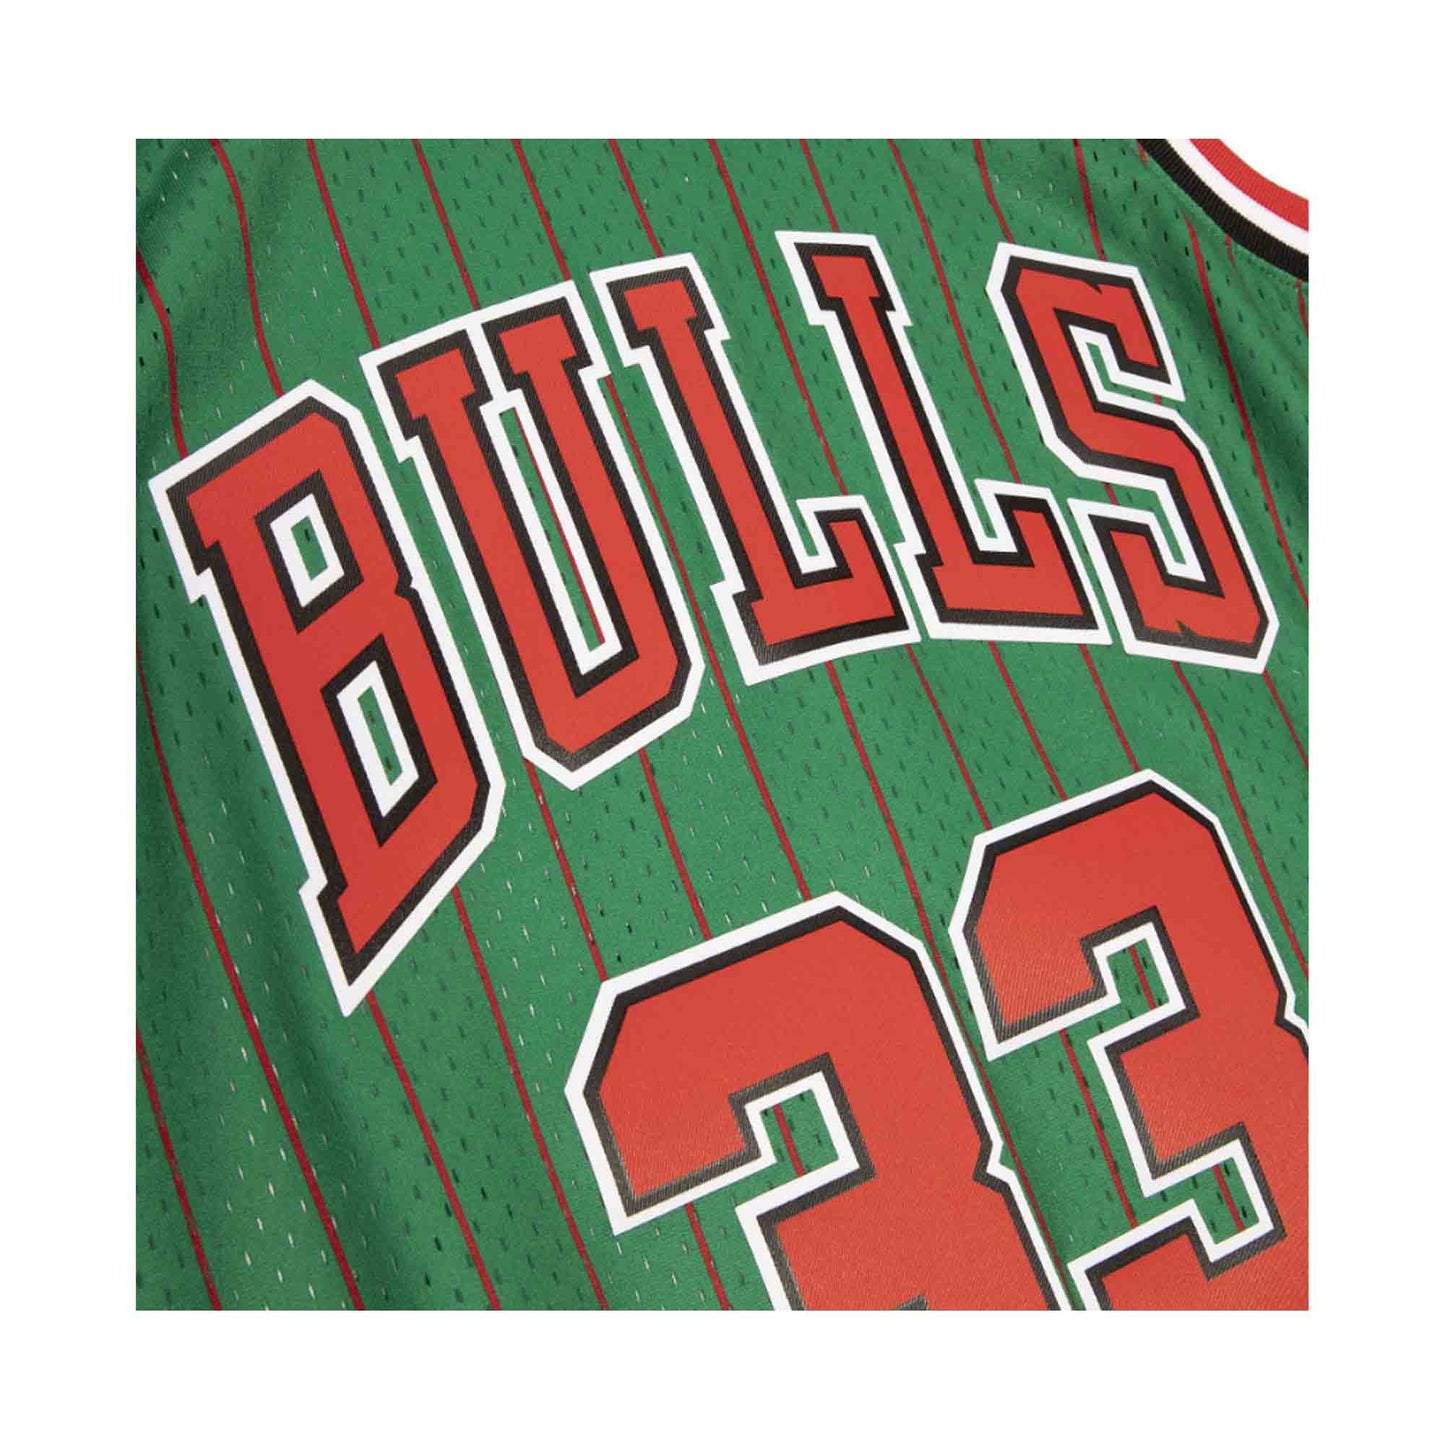 chicago bulls green jersey